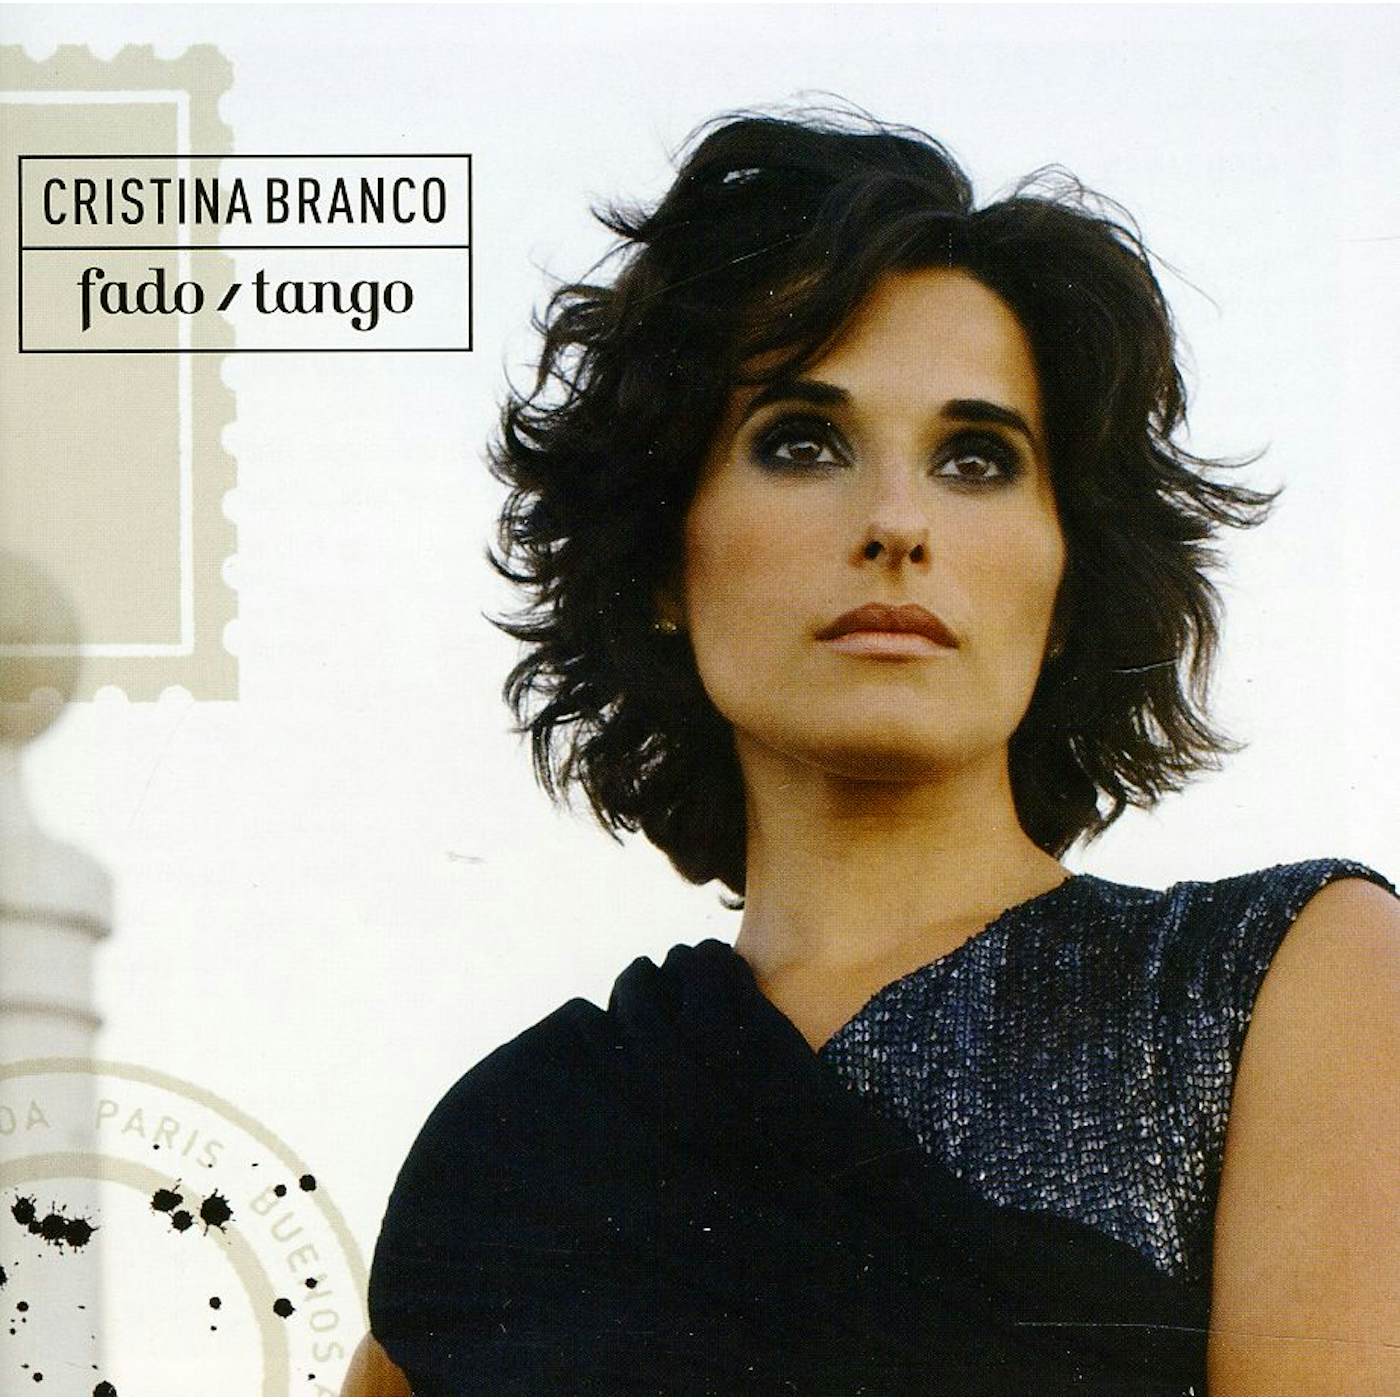 Cristina Branco FADO TANGO CD